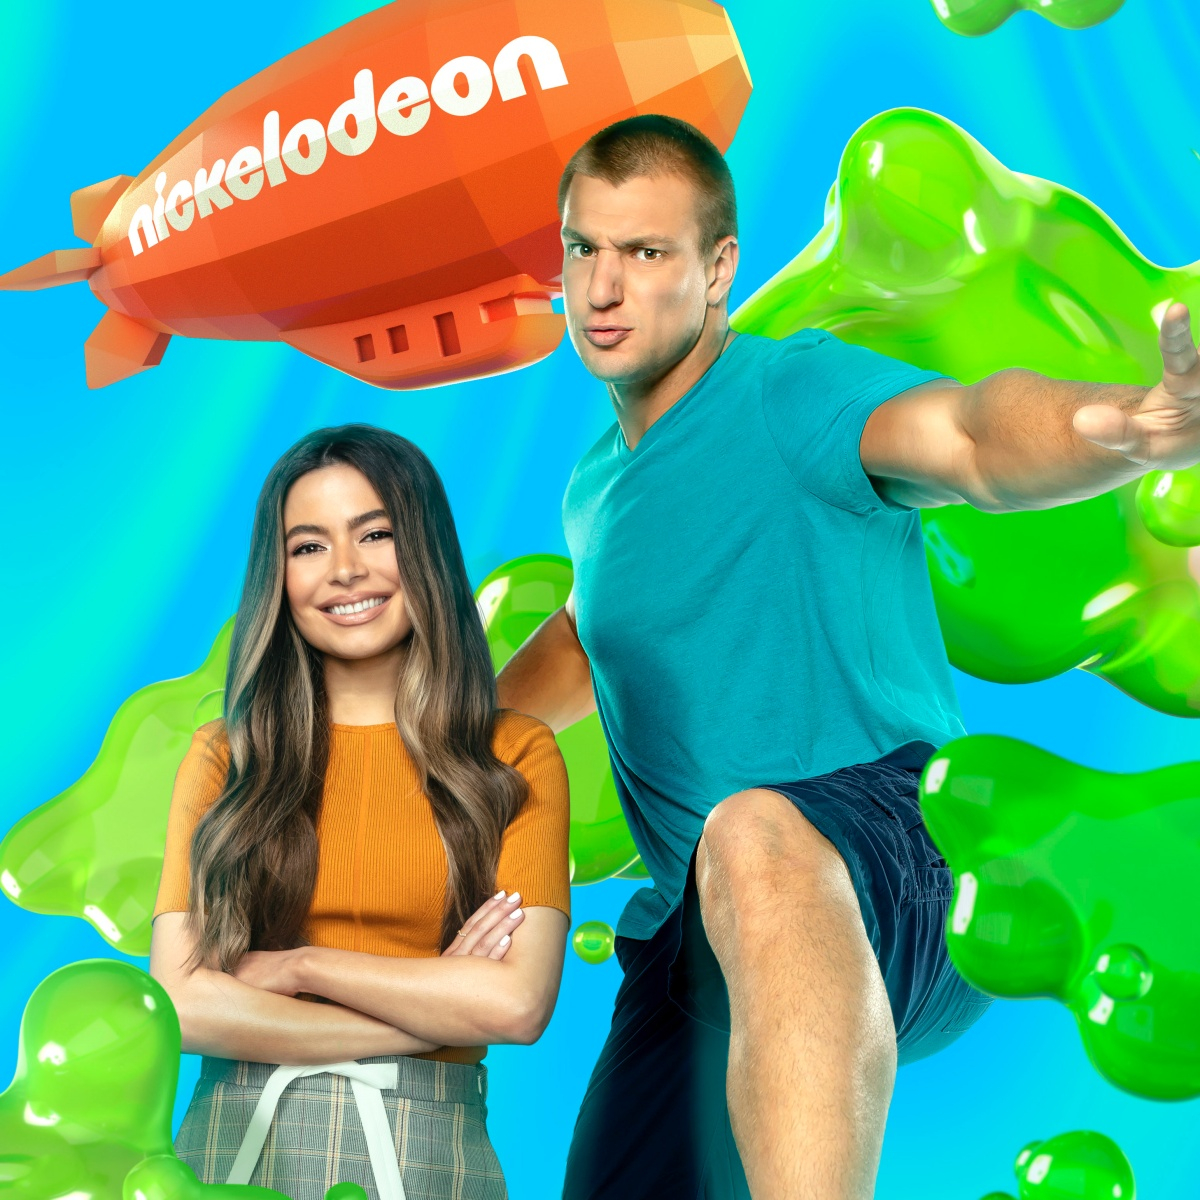 Nickelodeon Kids' Choice Awards: All the Viral Moments, Big